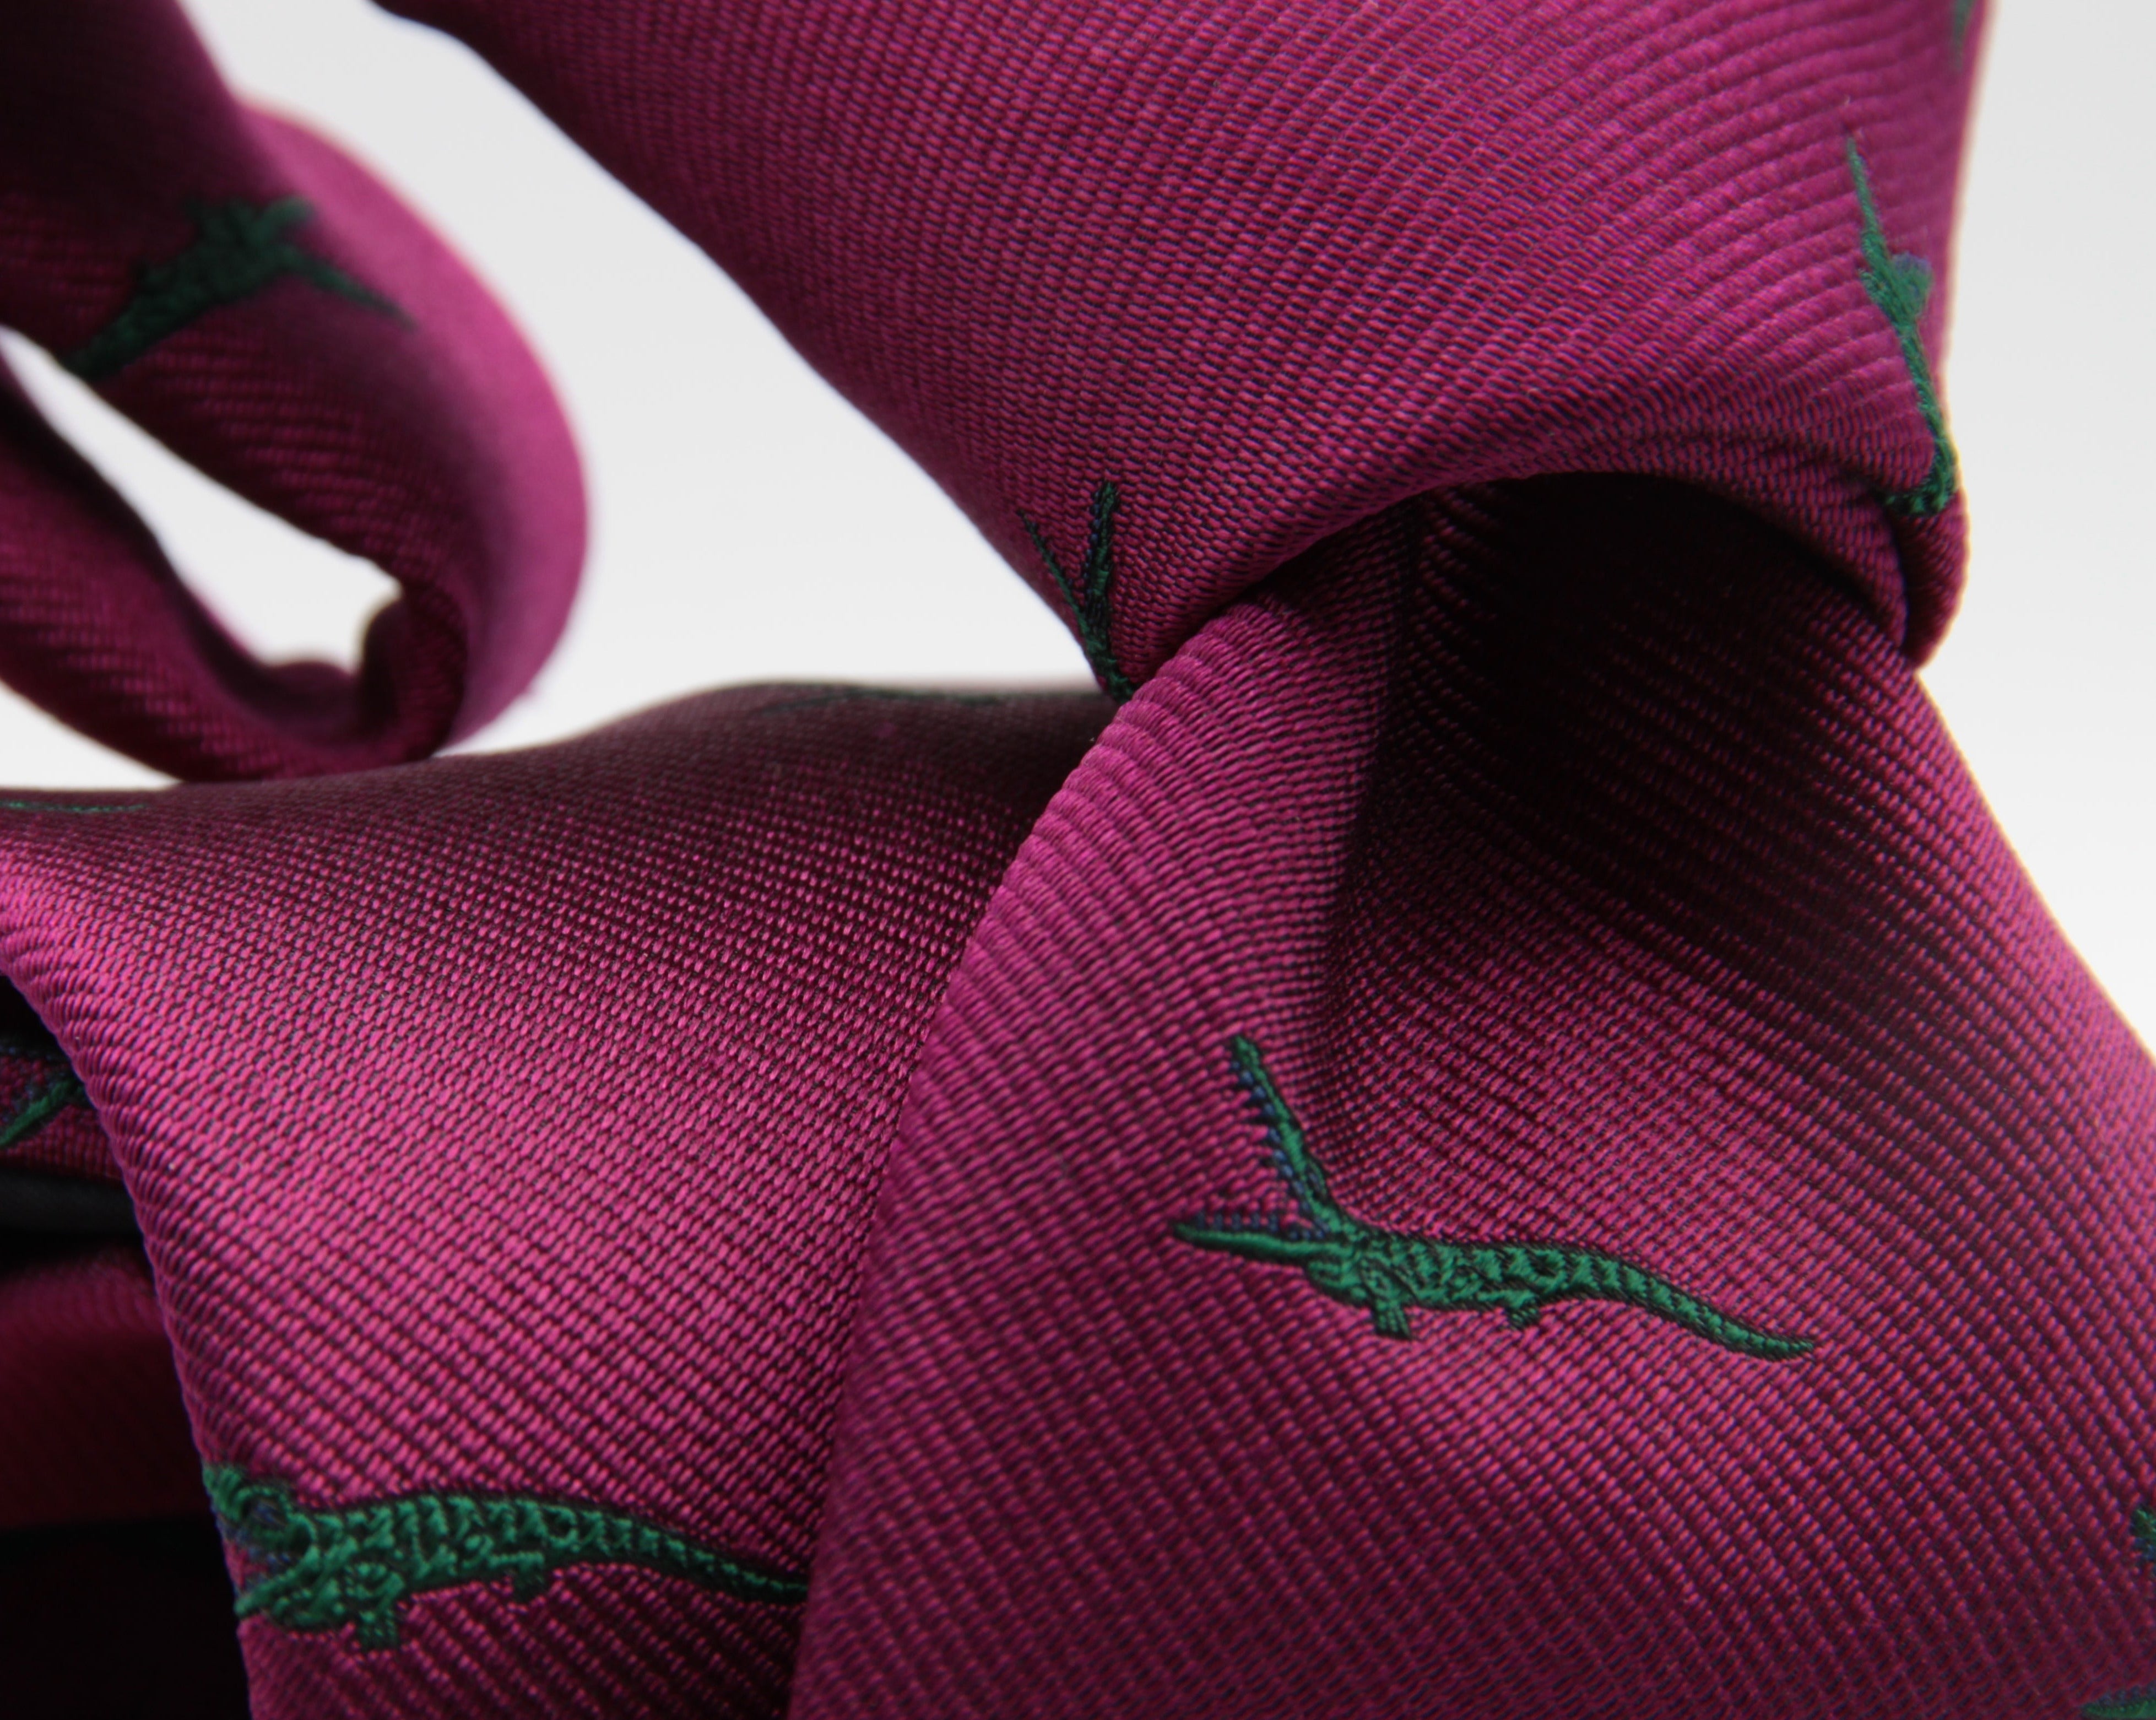 Drake's for Cruciani e Bella 100%  Woven Silk Tipped Fucsia and Green Crocodile Motif Tie Handmade in London, England 8 cm x 150 cm #3649